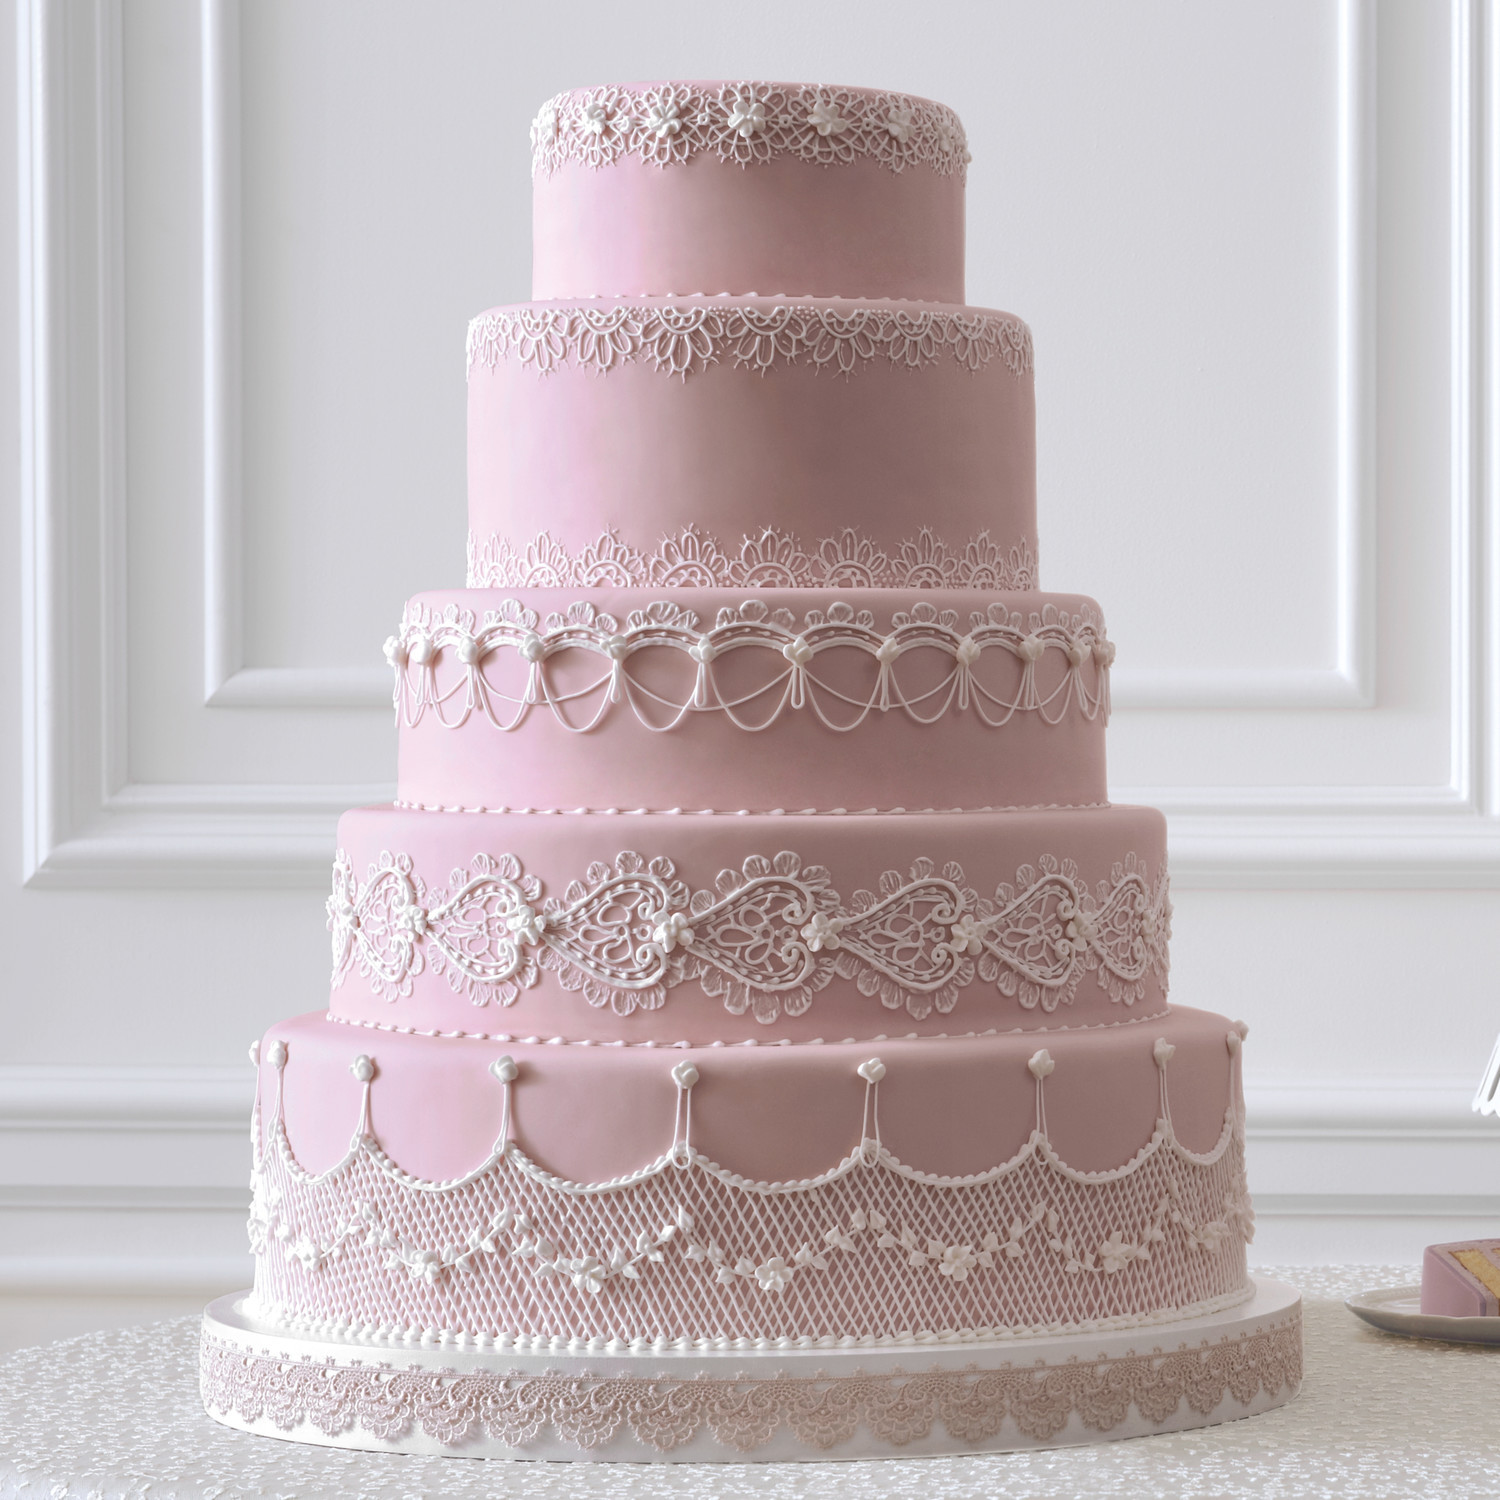 Wedding Cakes Images
 The Masters of the Wedding Cake